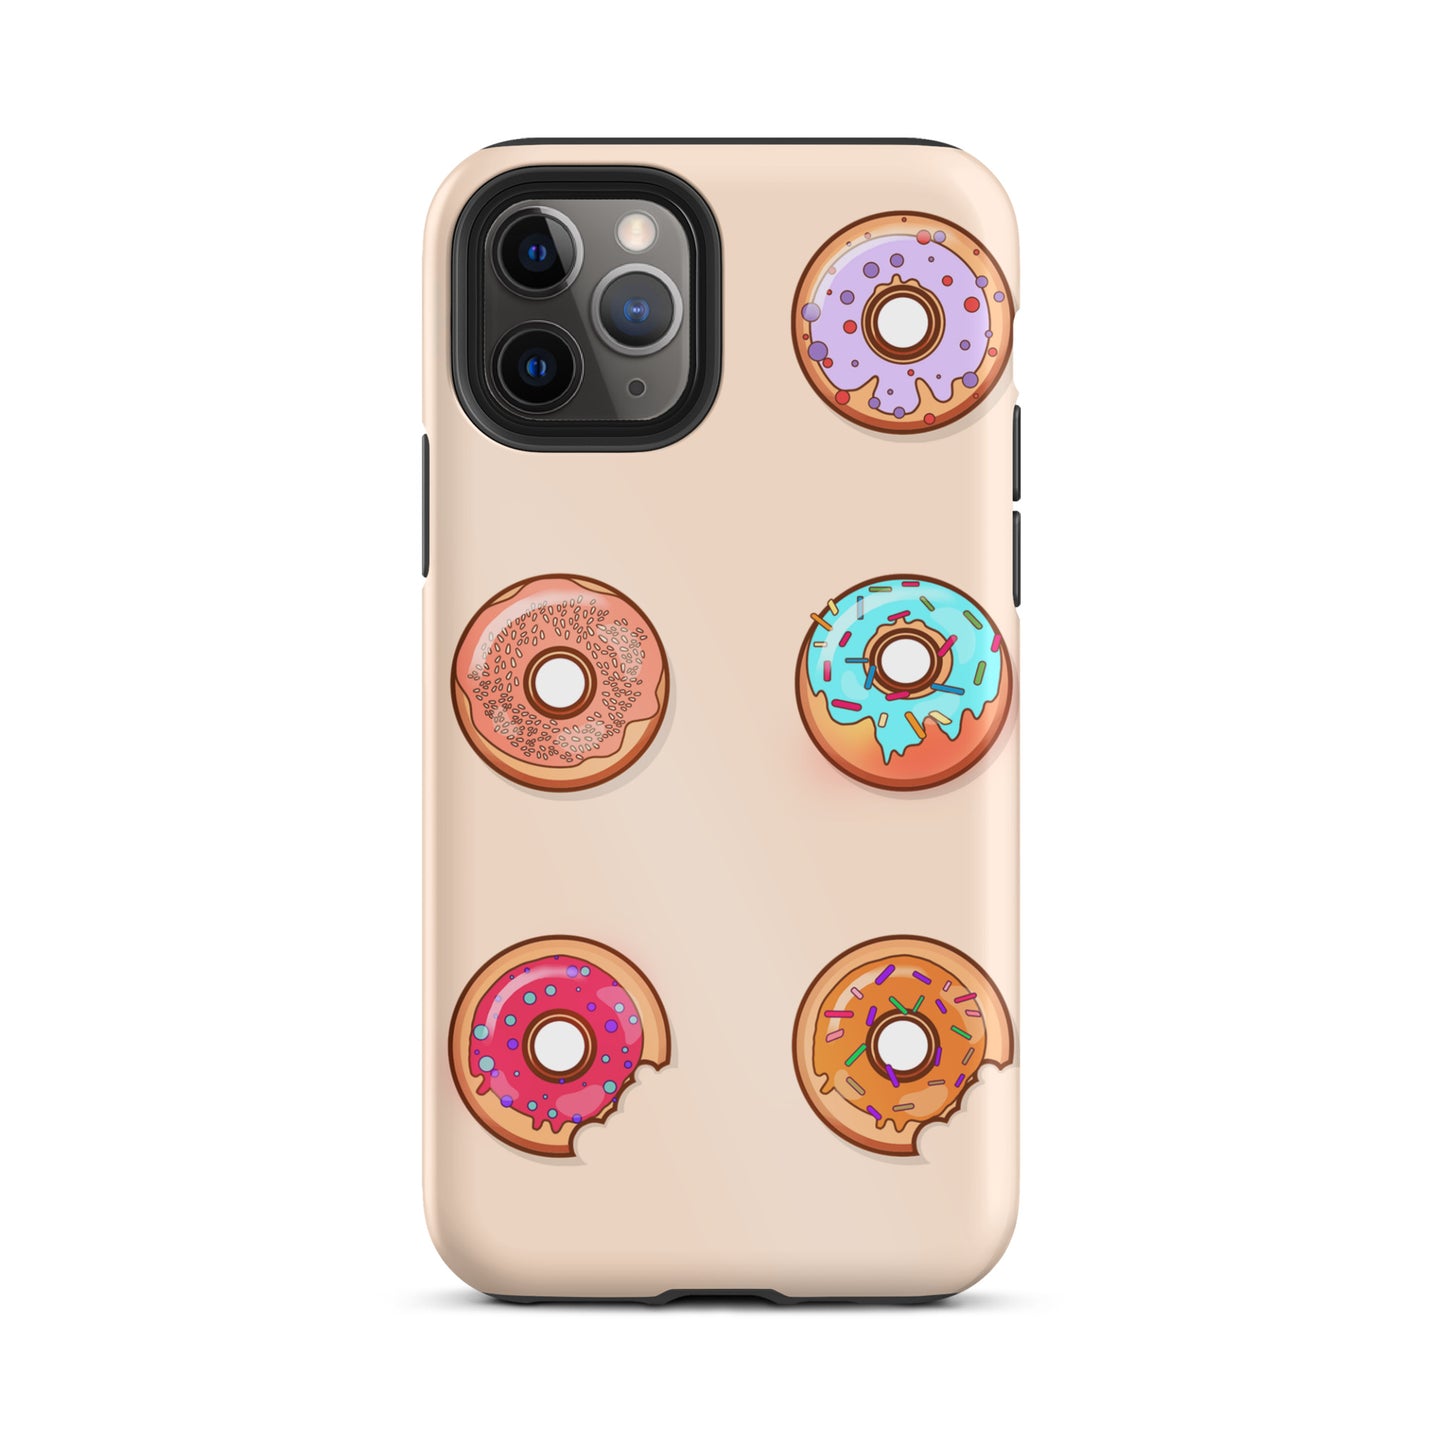 Donut iPhone case